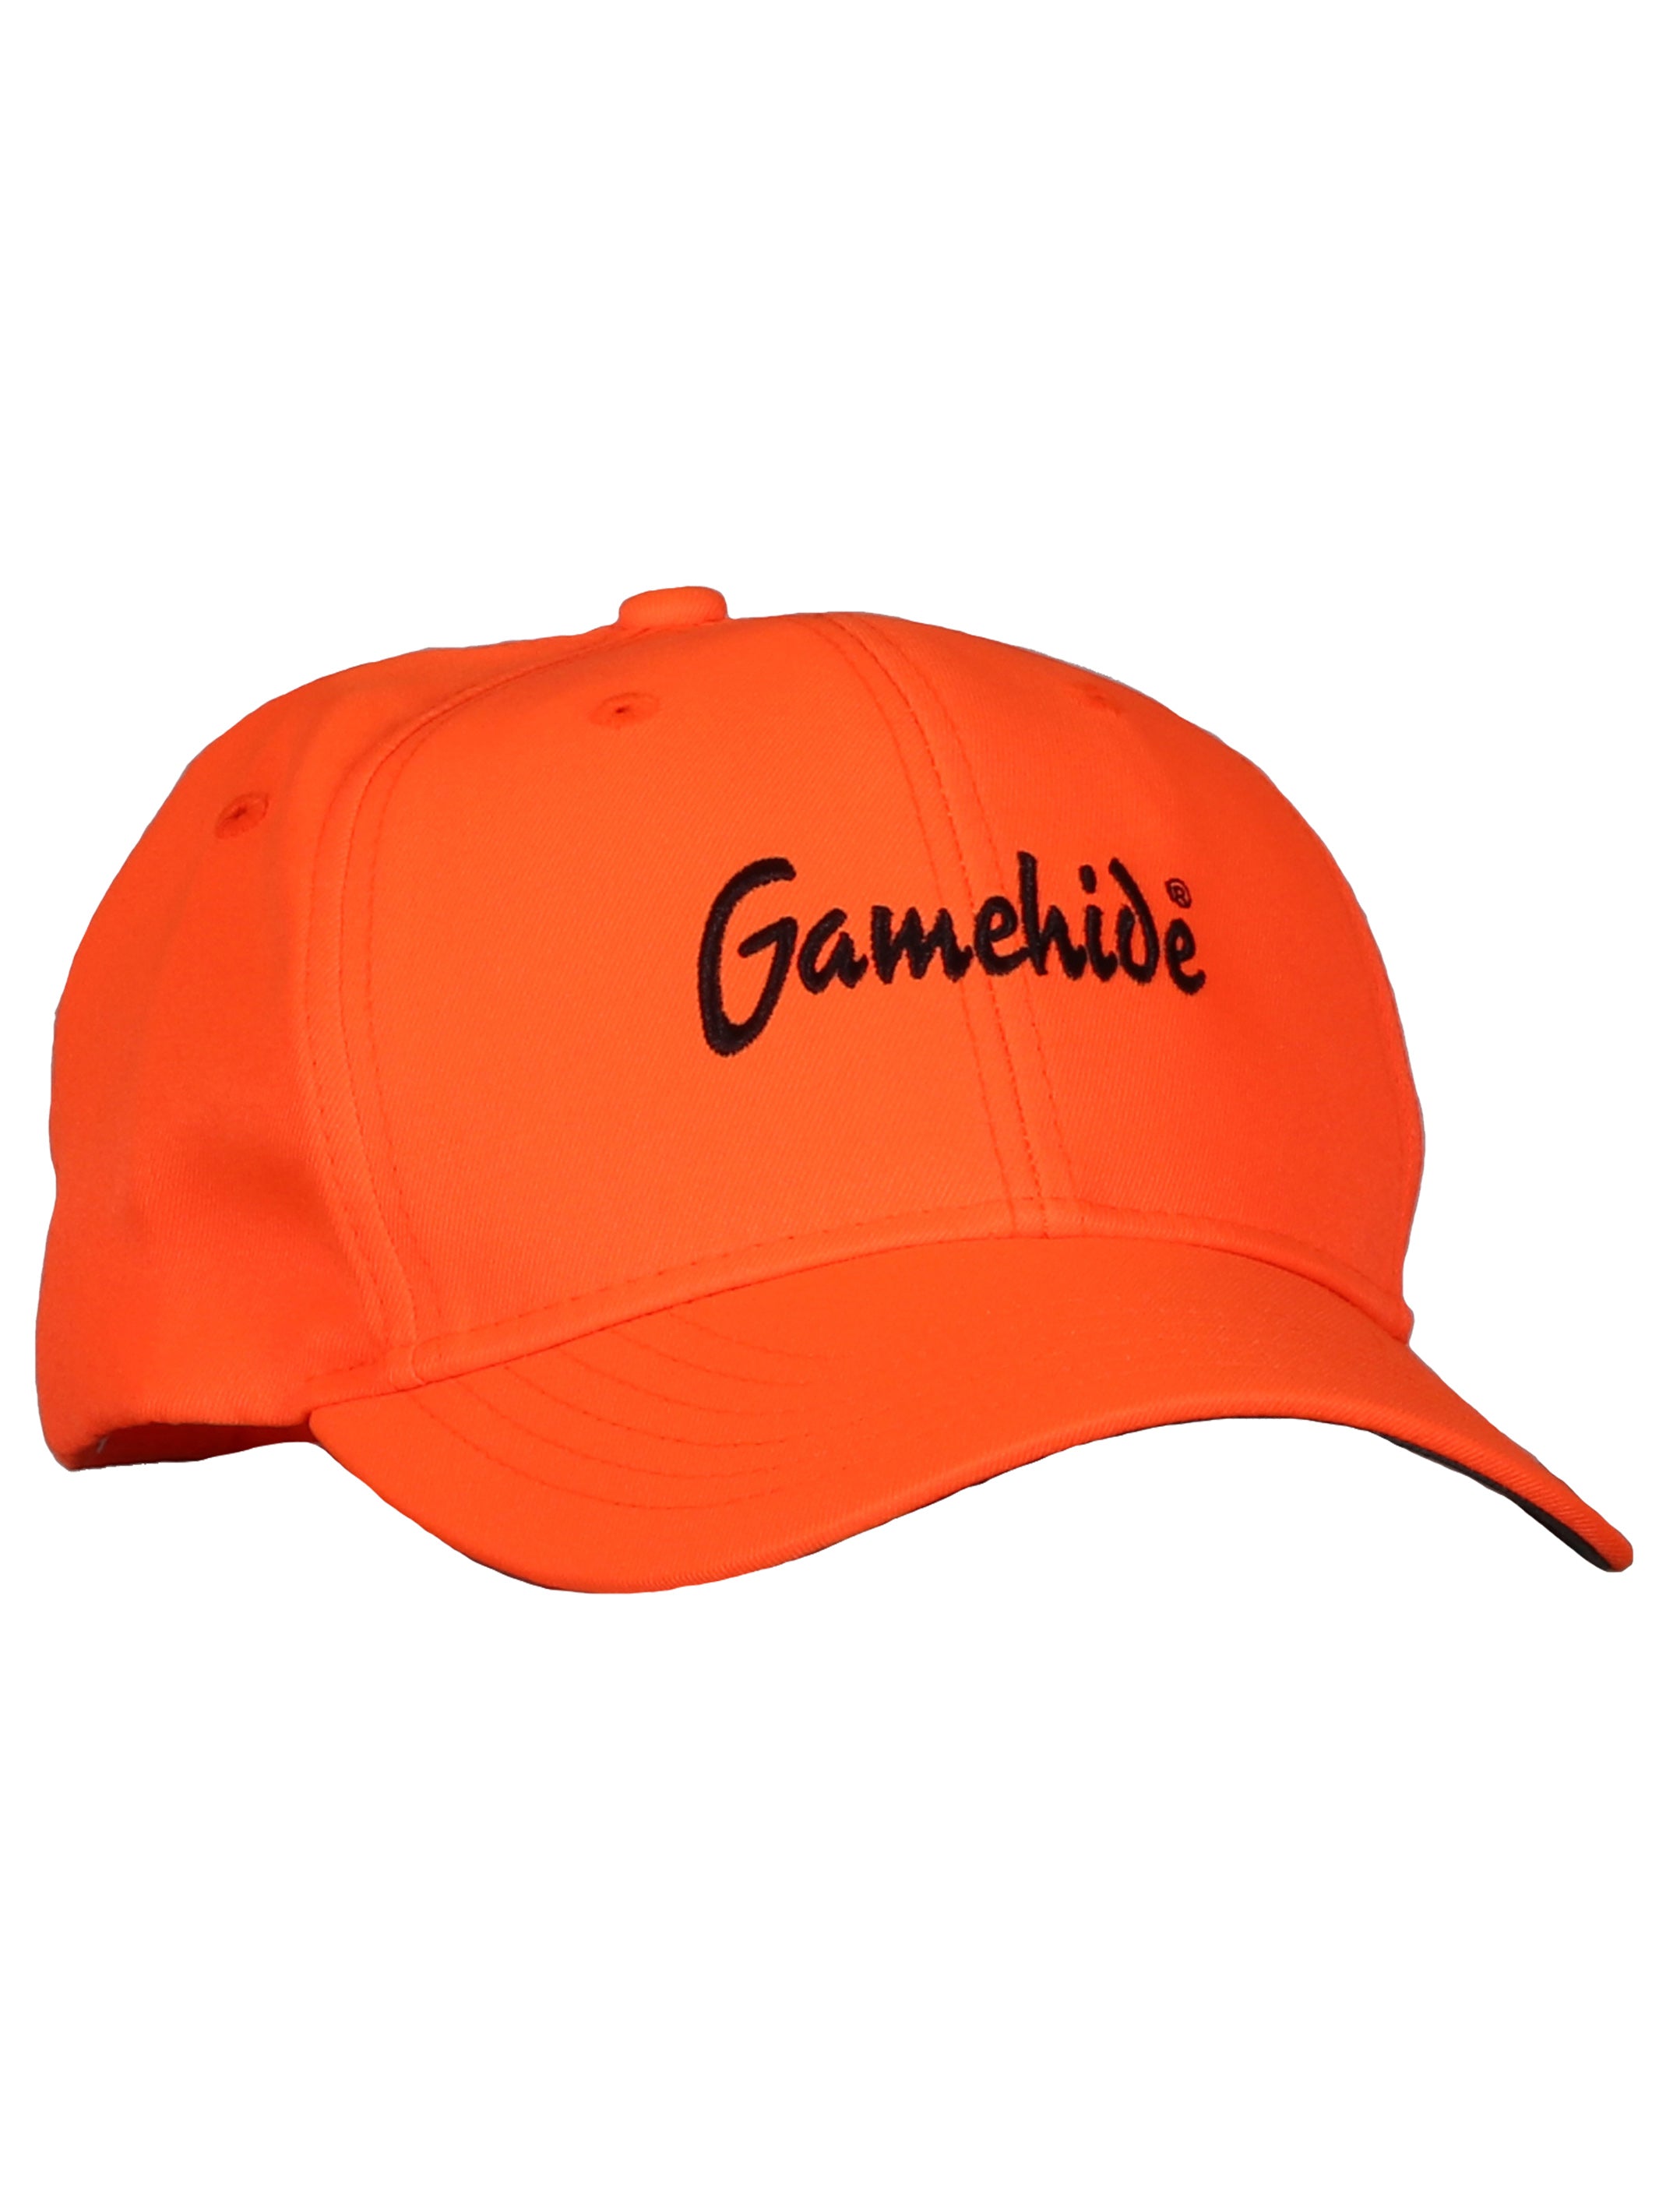 Gamehide jockey hat front (blaze orange)